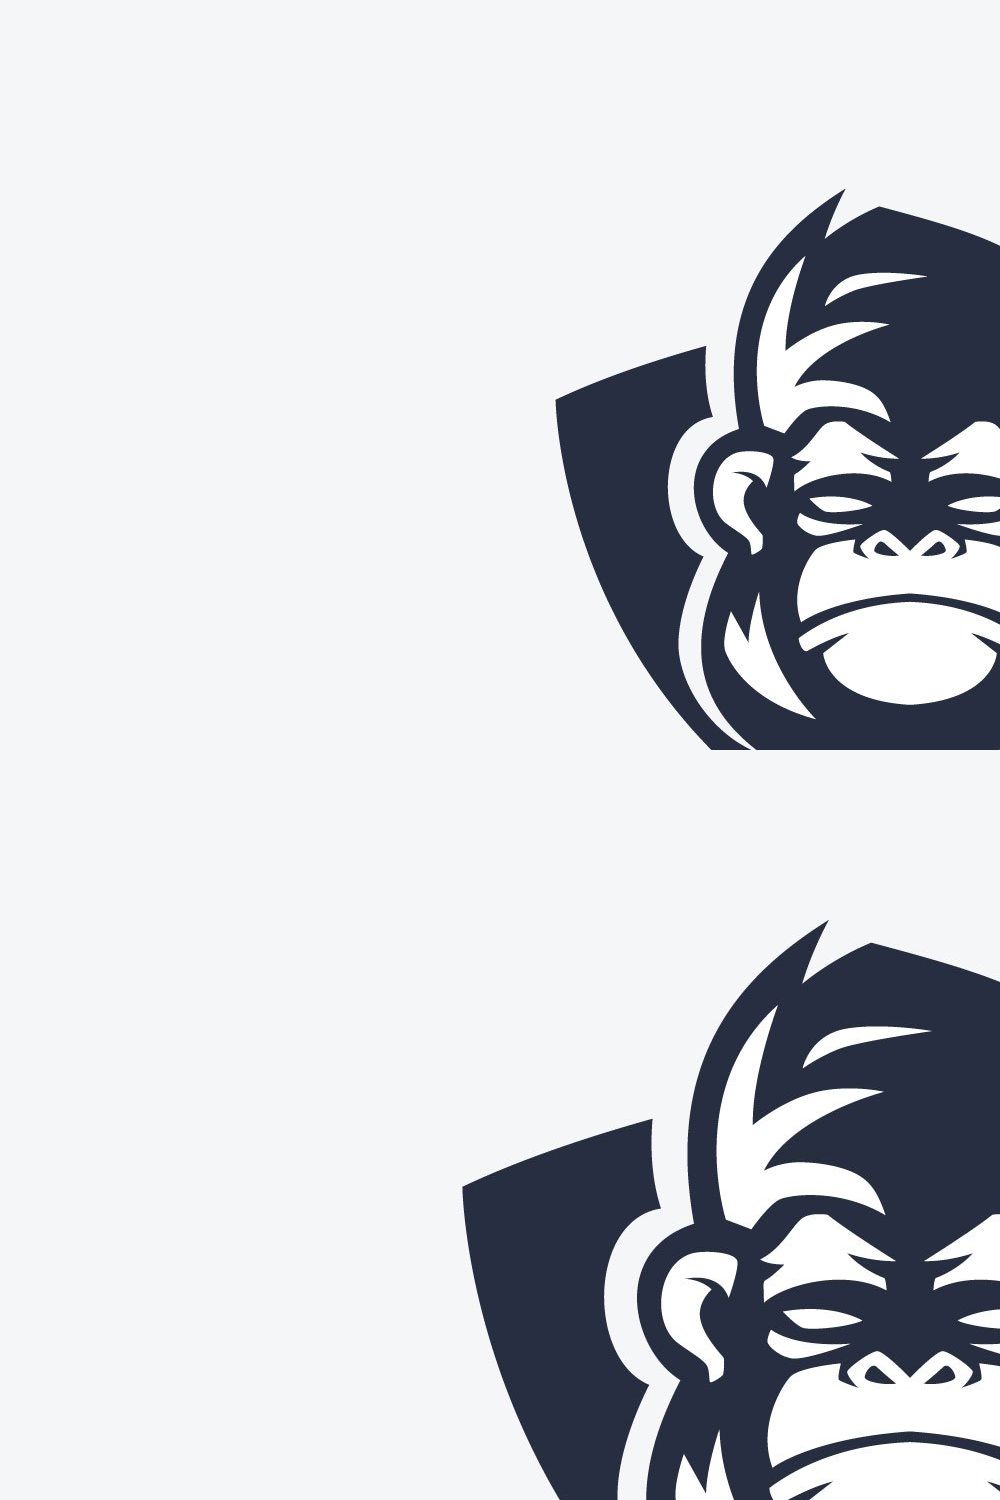 Monkey Shield Logo Design Templates pinterest preview image.